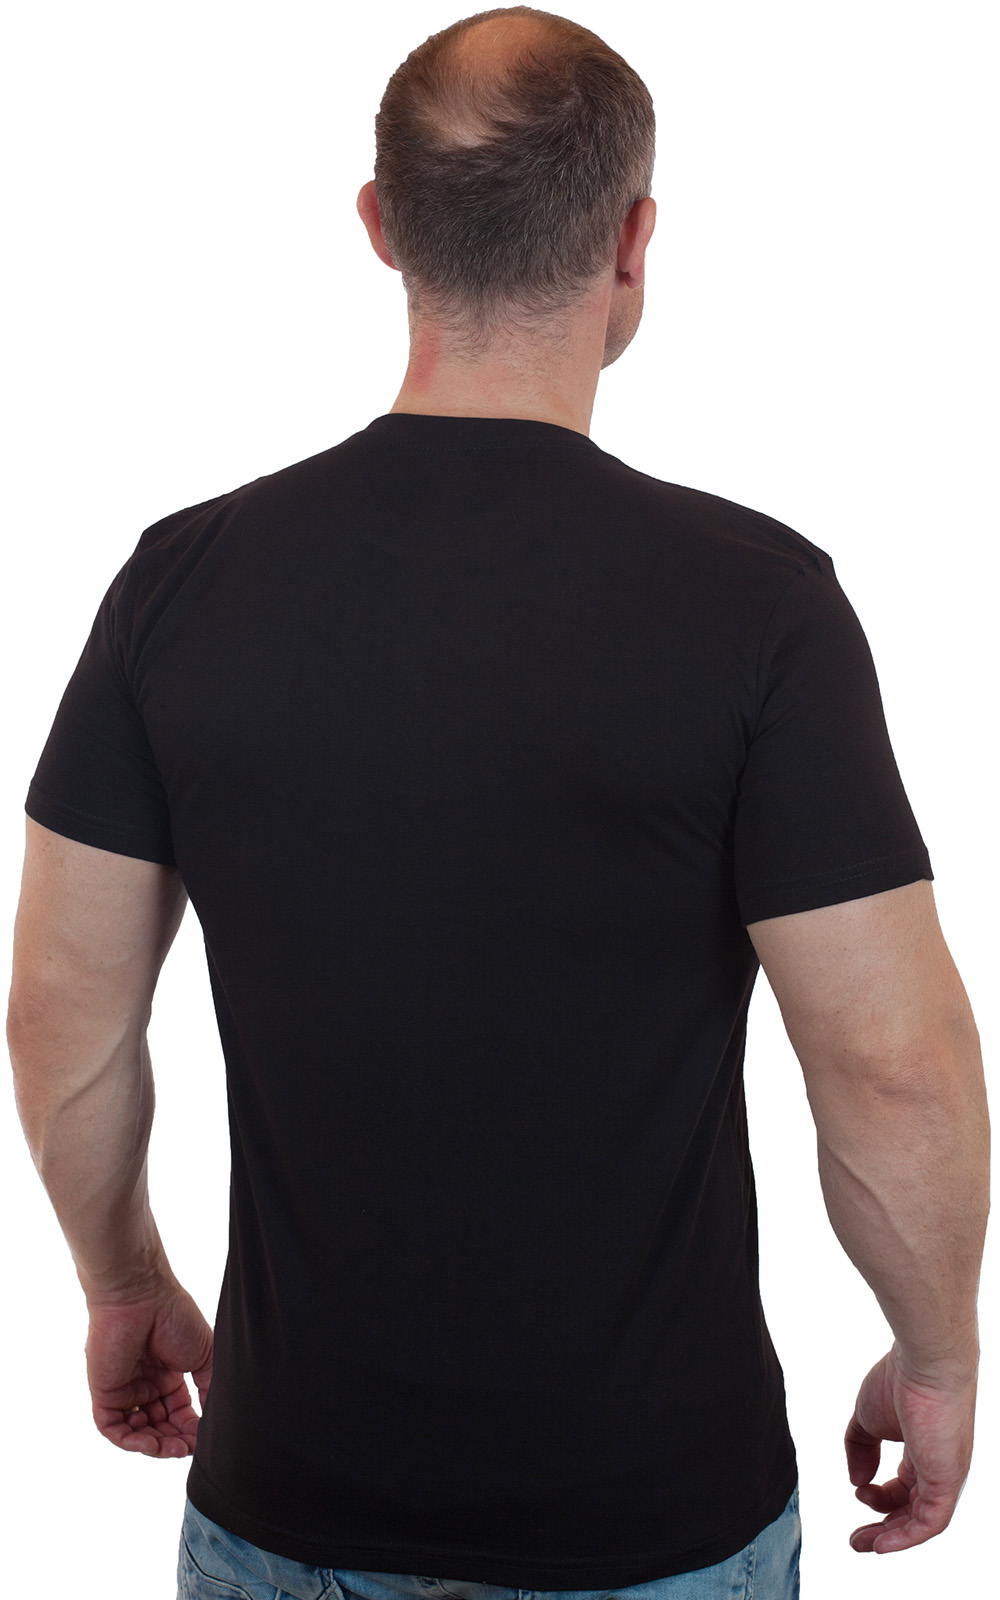 Мужская черная футболка – классика жанра по супер цене